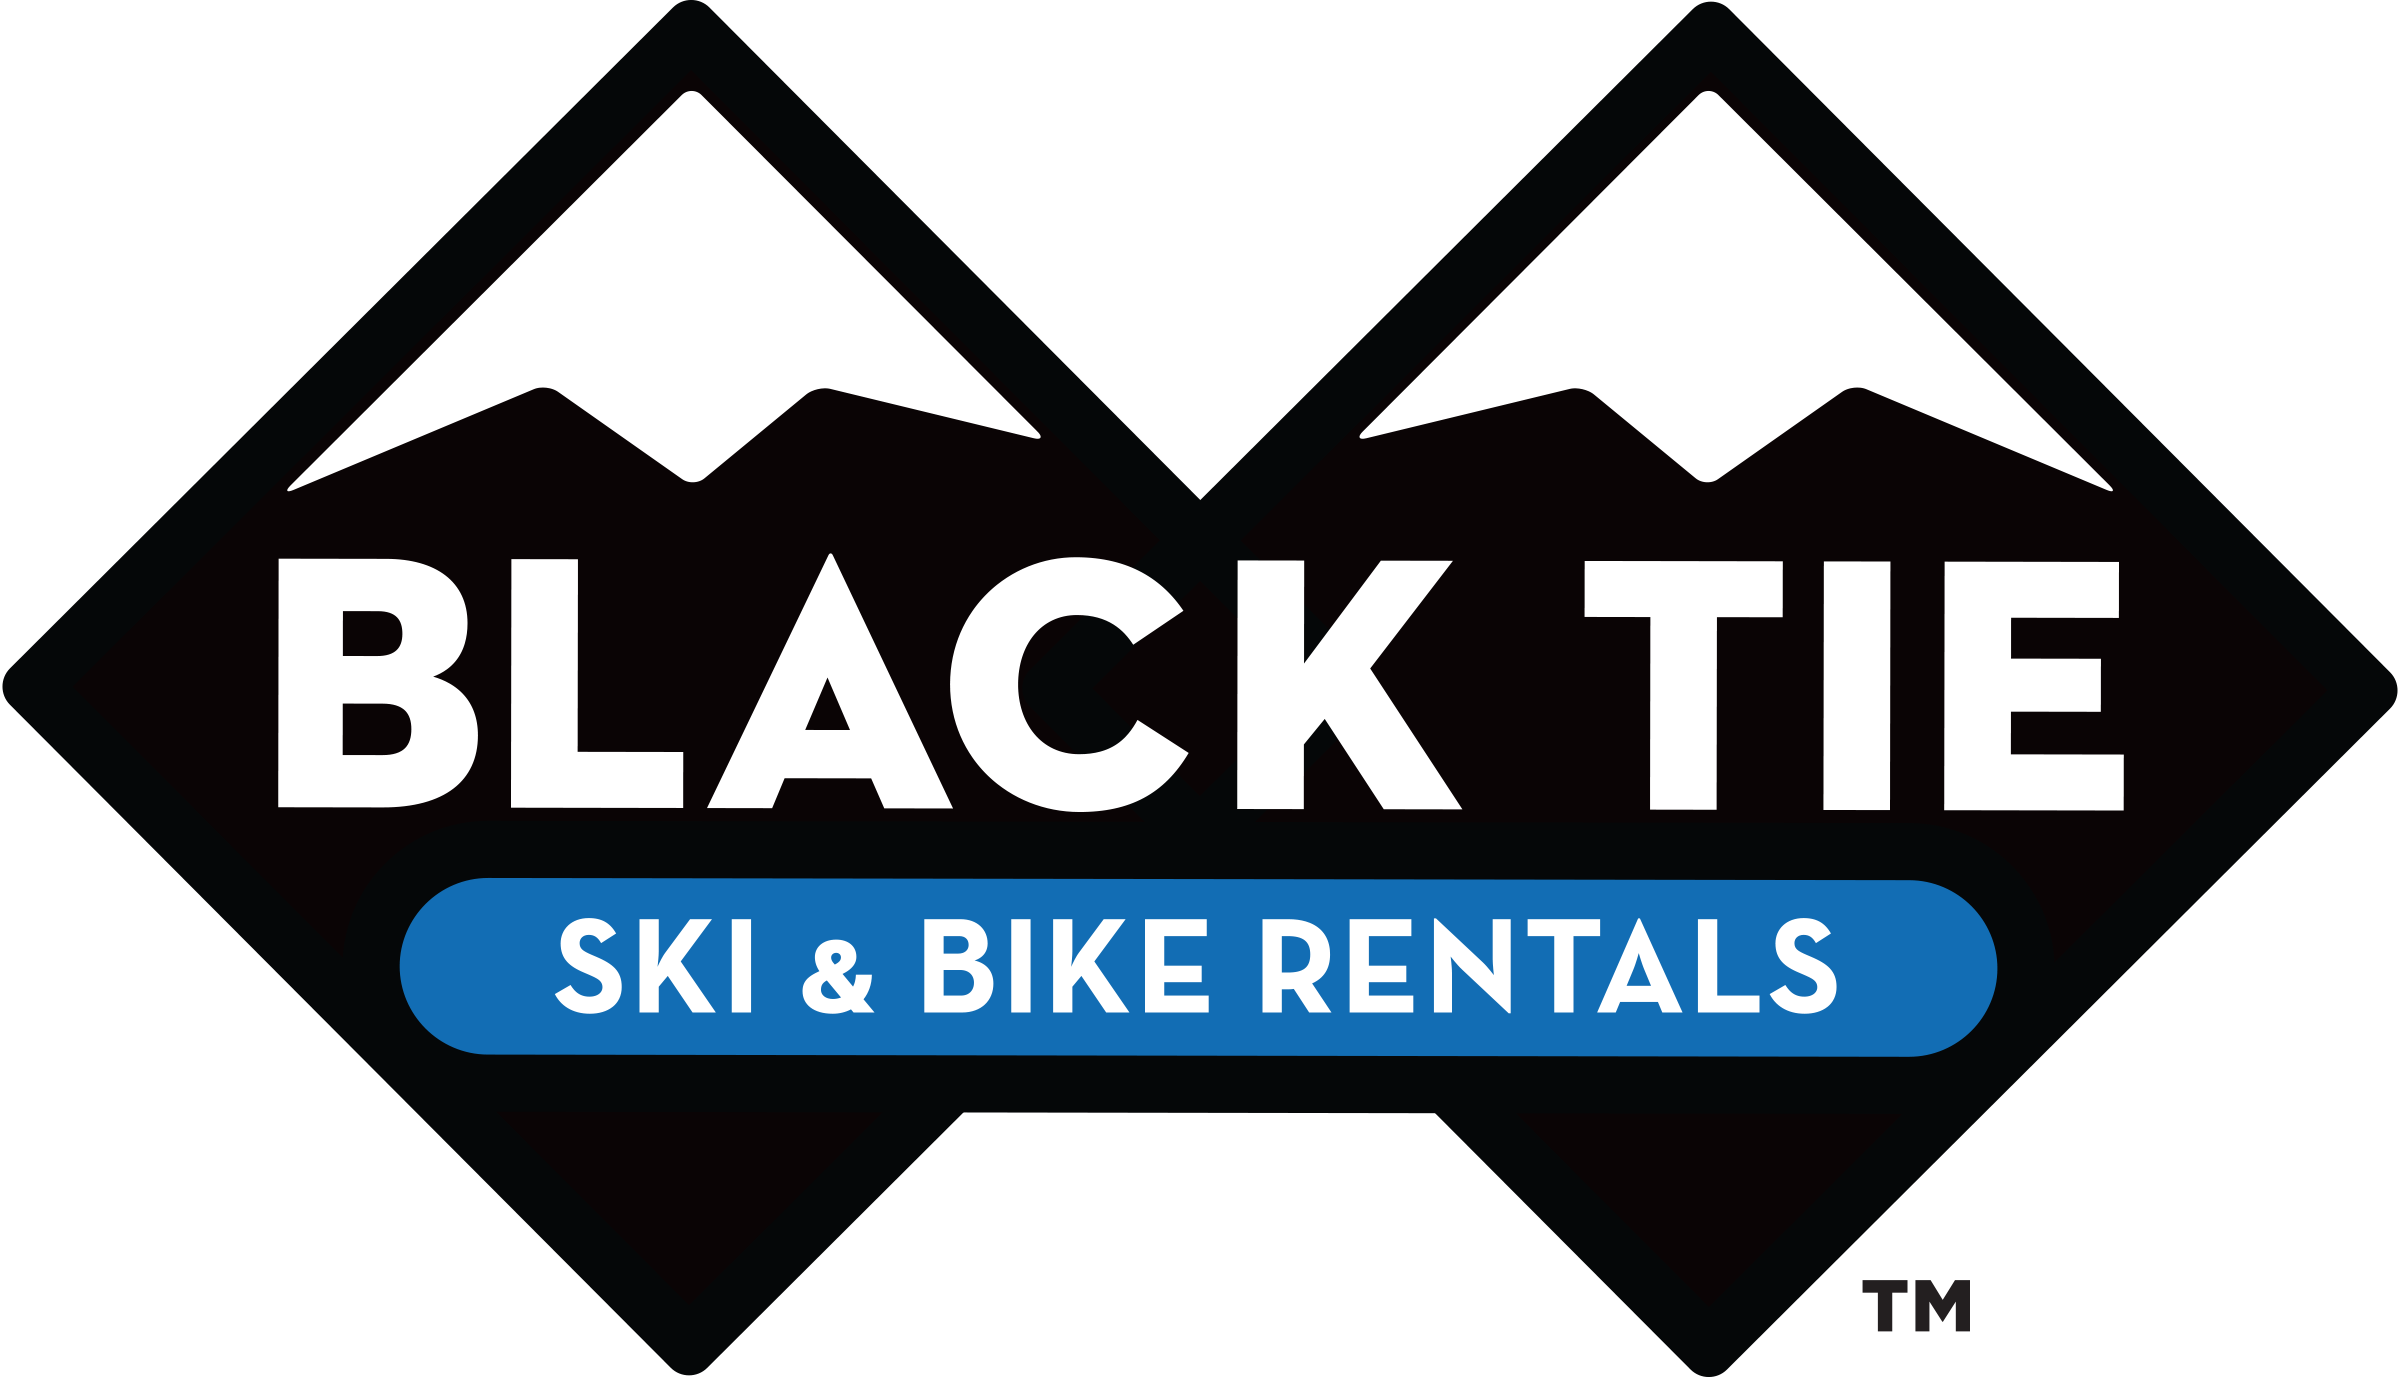 General Manager of Black Tie Ski and Bike Rentals